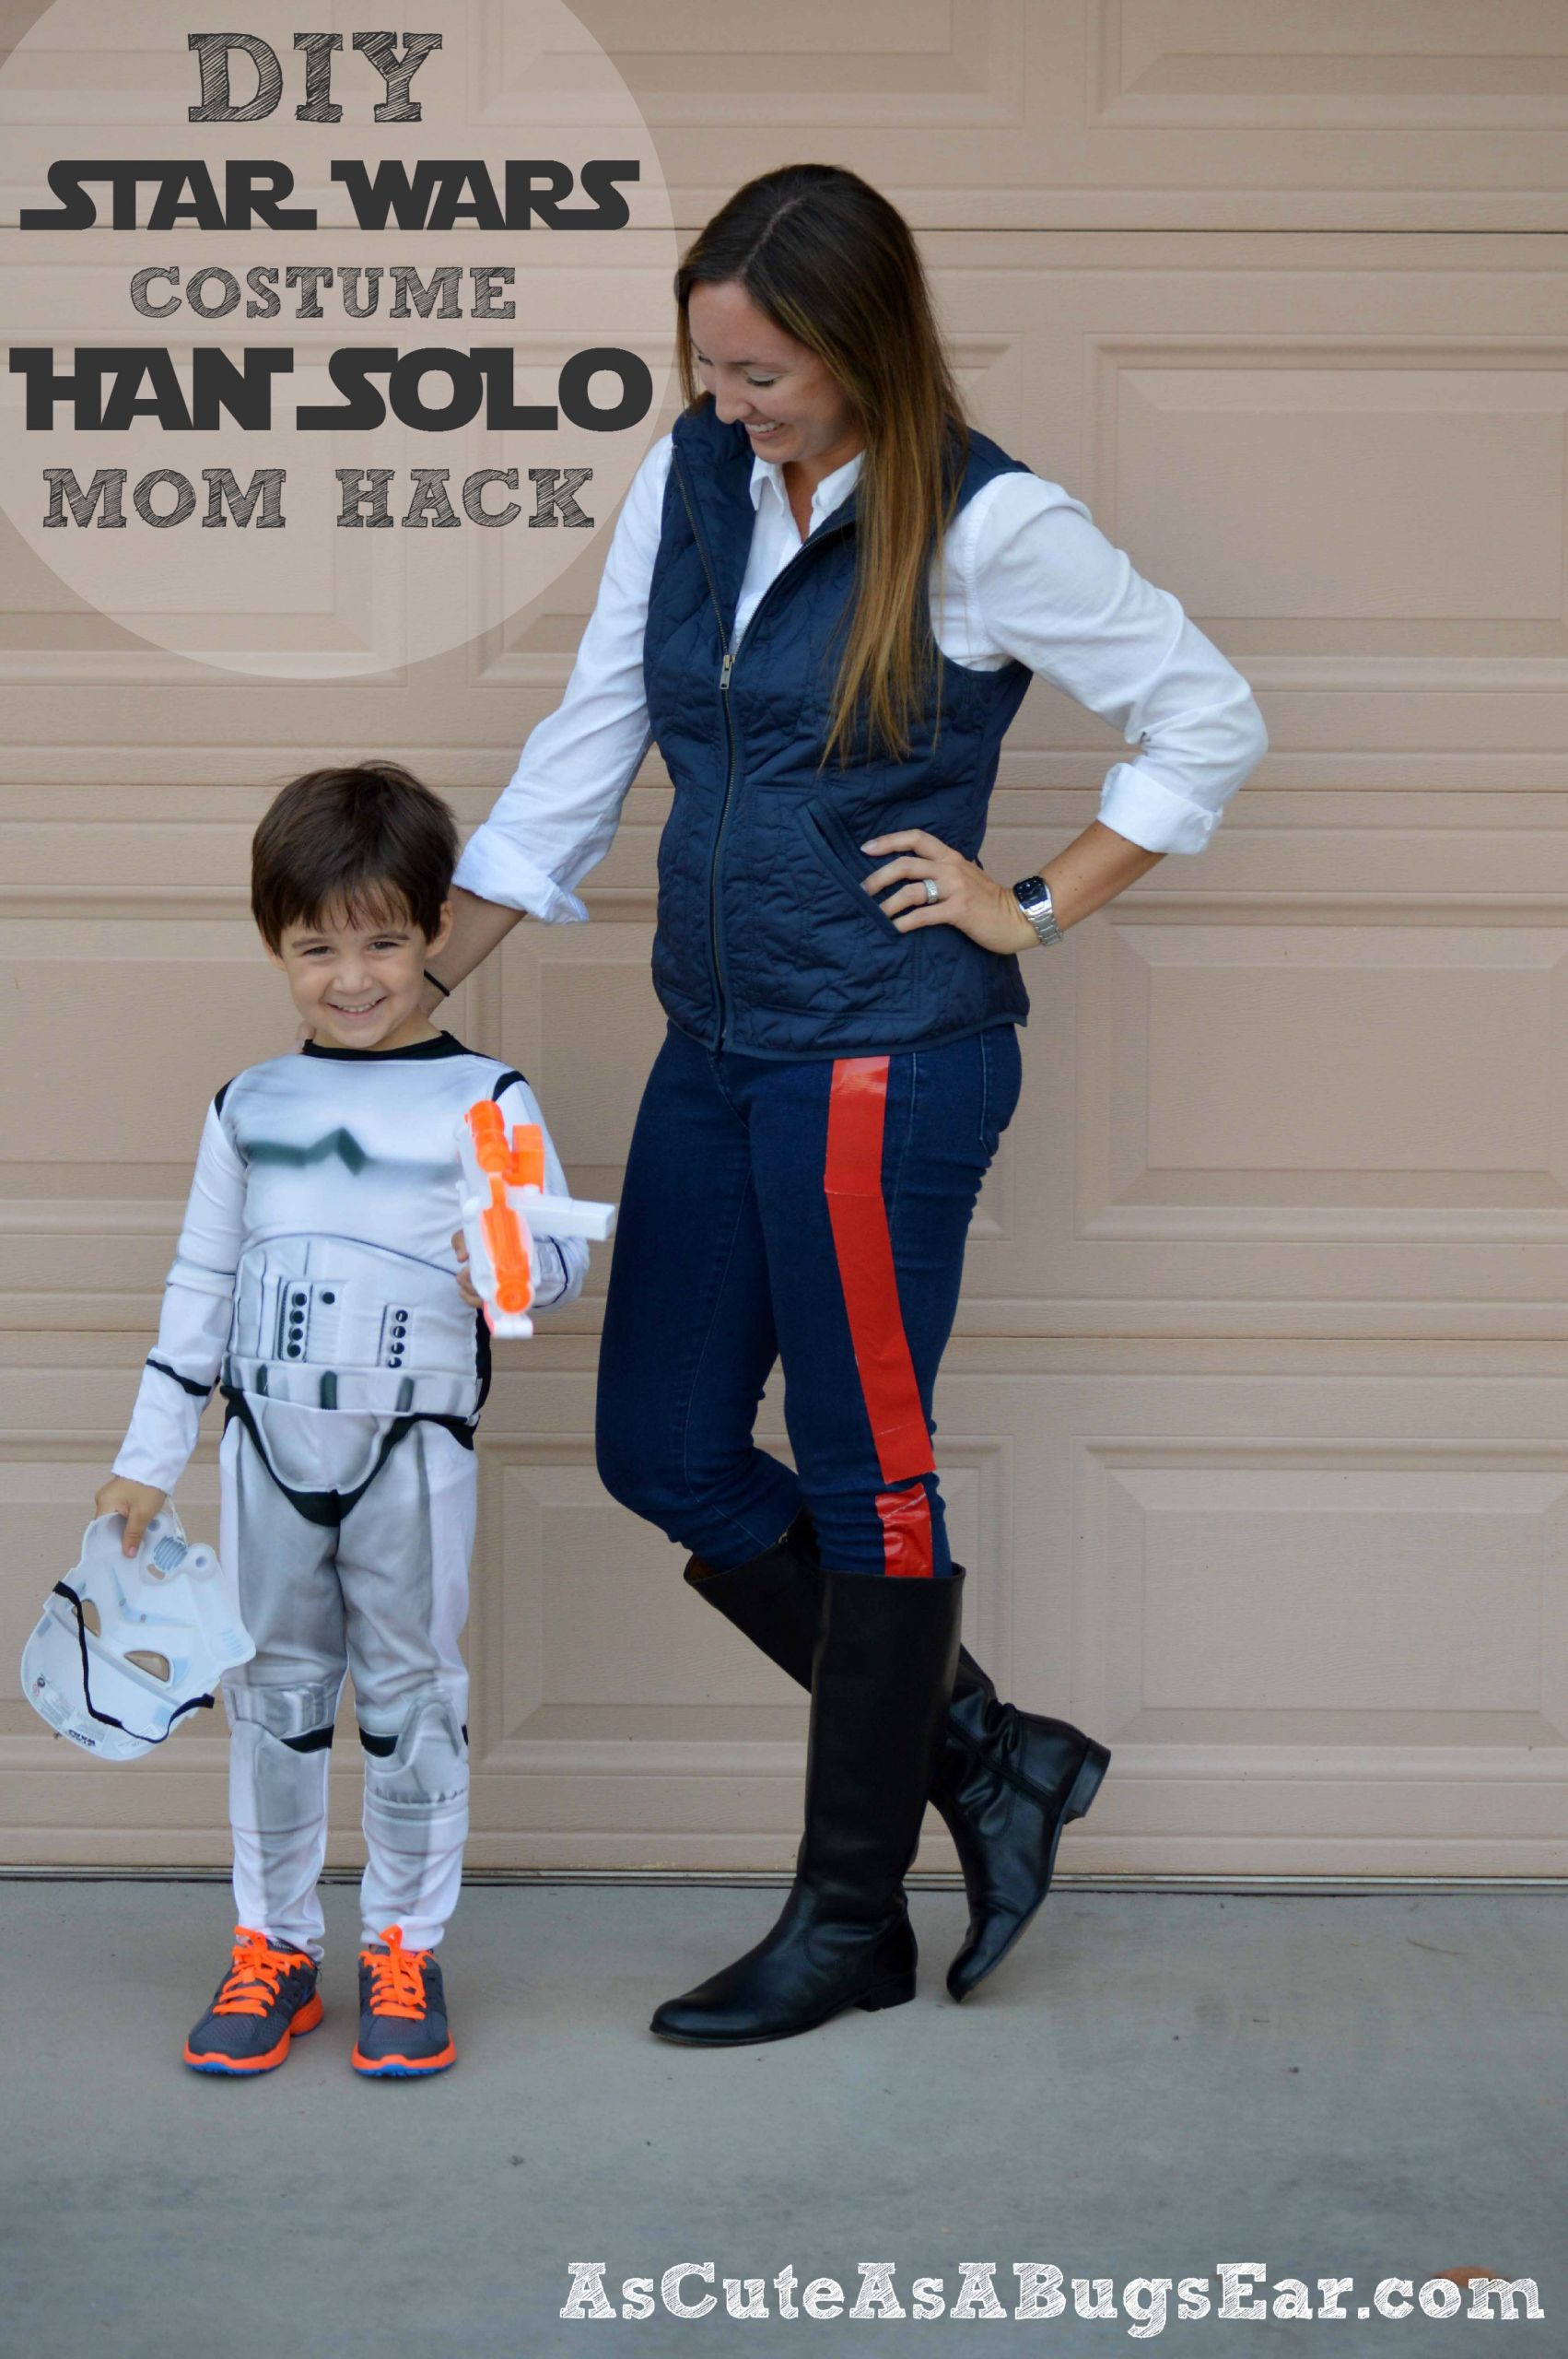 Star Wars DIY Costume
 DIY Star Wars Costume Han Solo Mom Hack